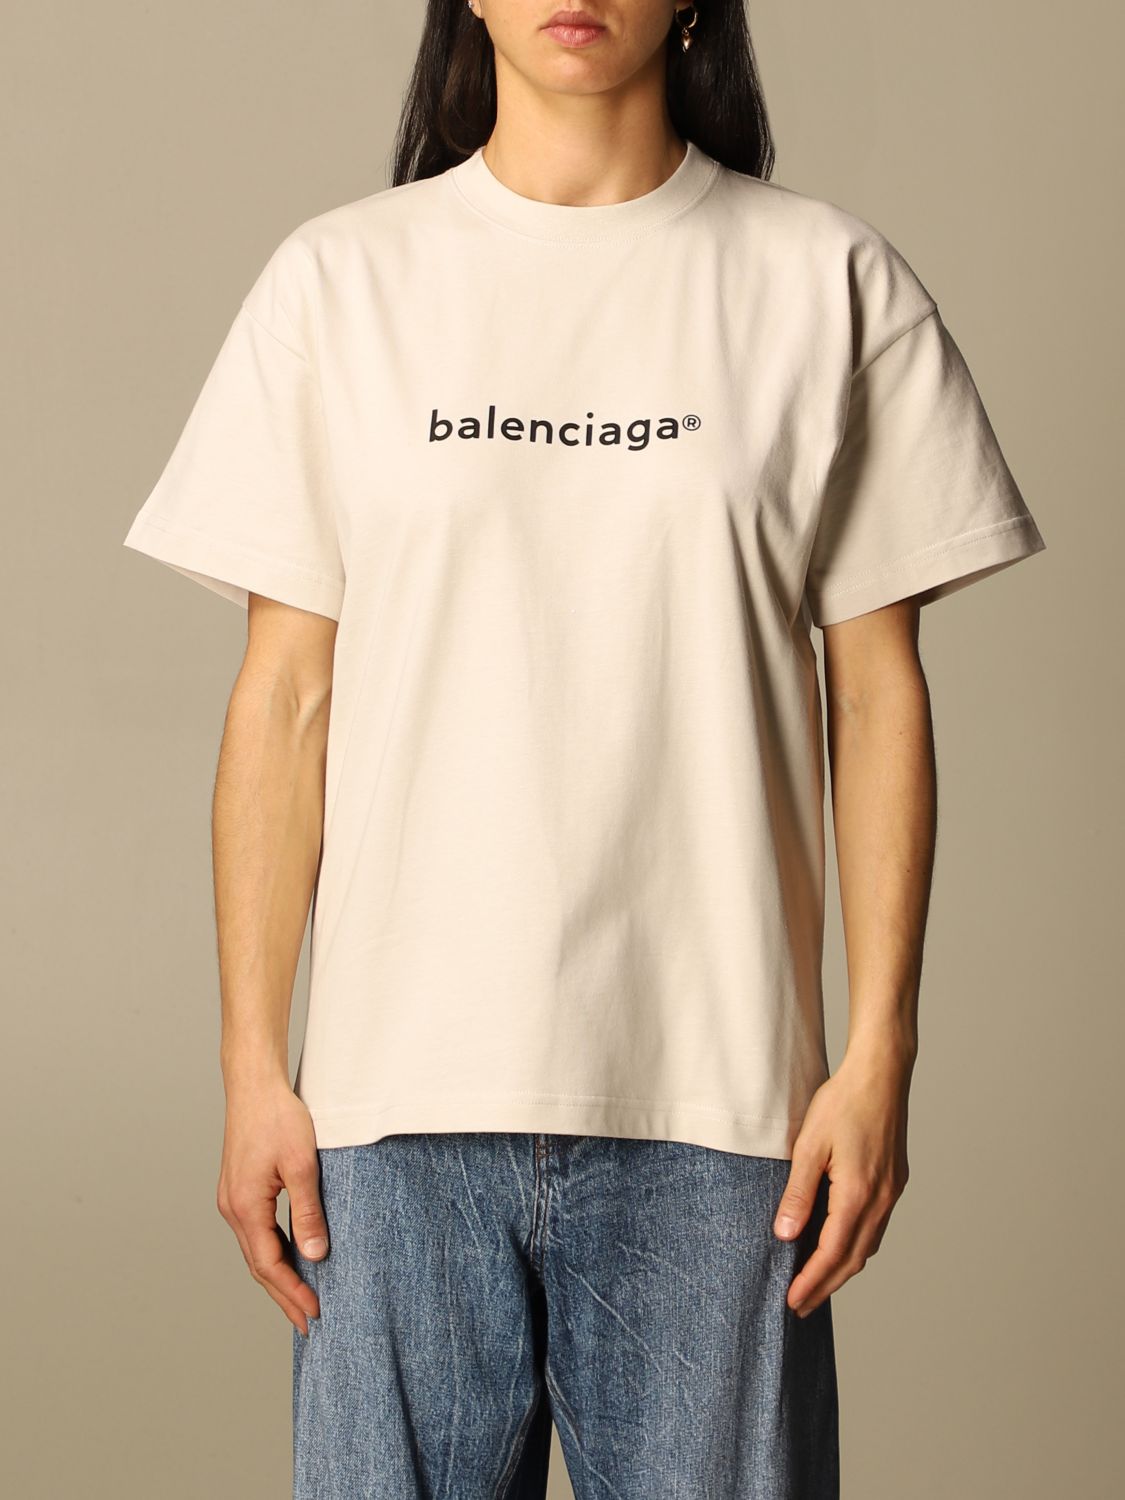 Balenciaga Women's Designer T-Shirt